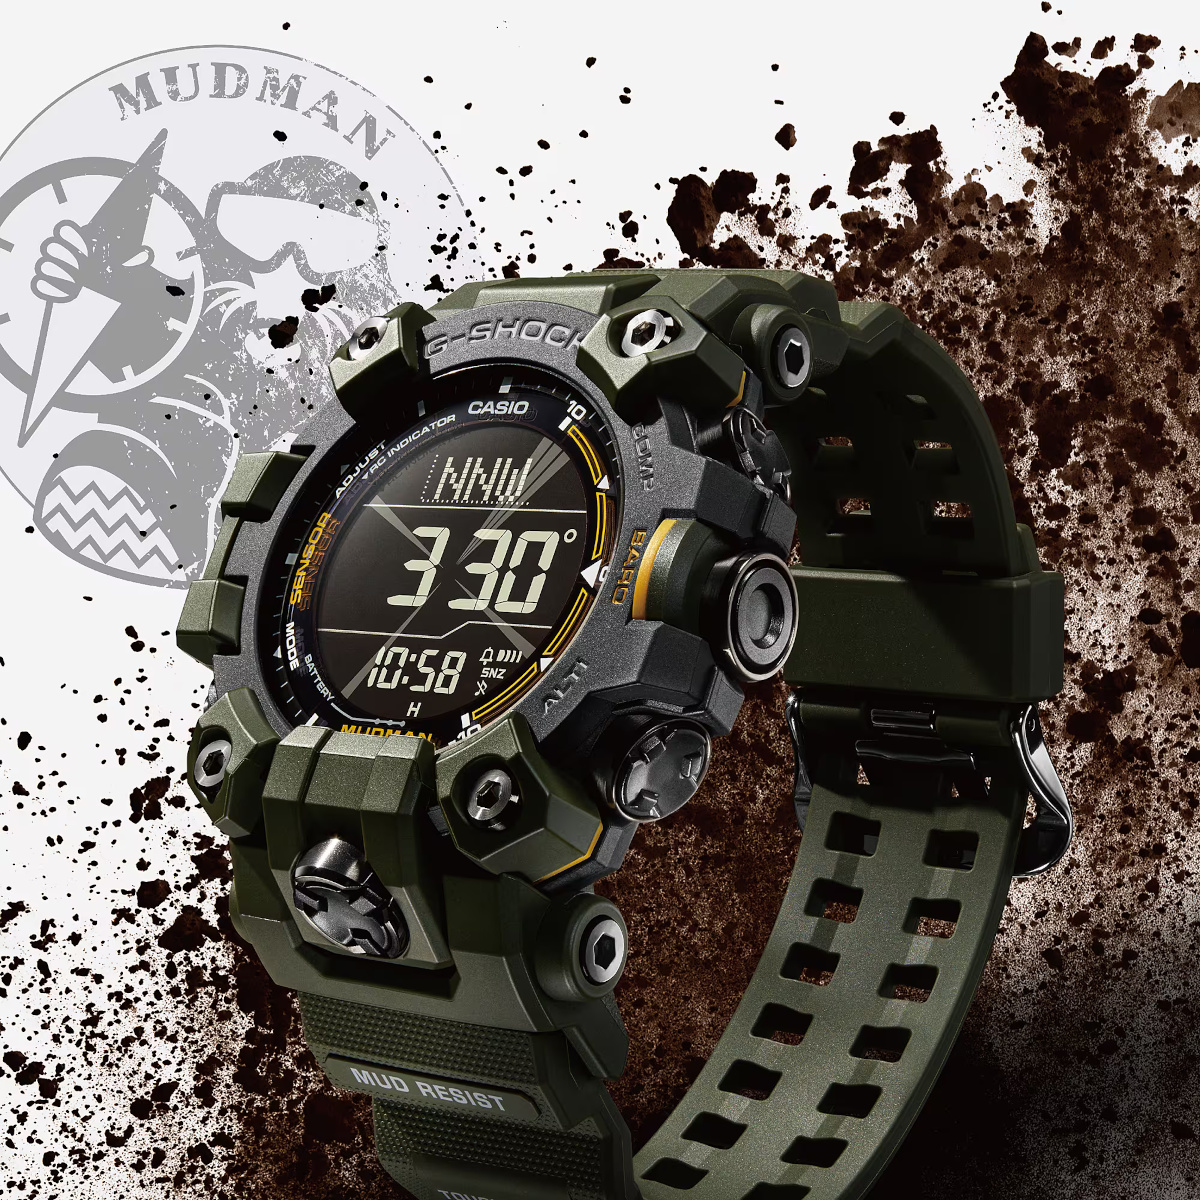 G-Shock Mudman GW-9500 a Pro duplex LCD display, Triple Sensor, Solar-Radio Timekeeping